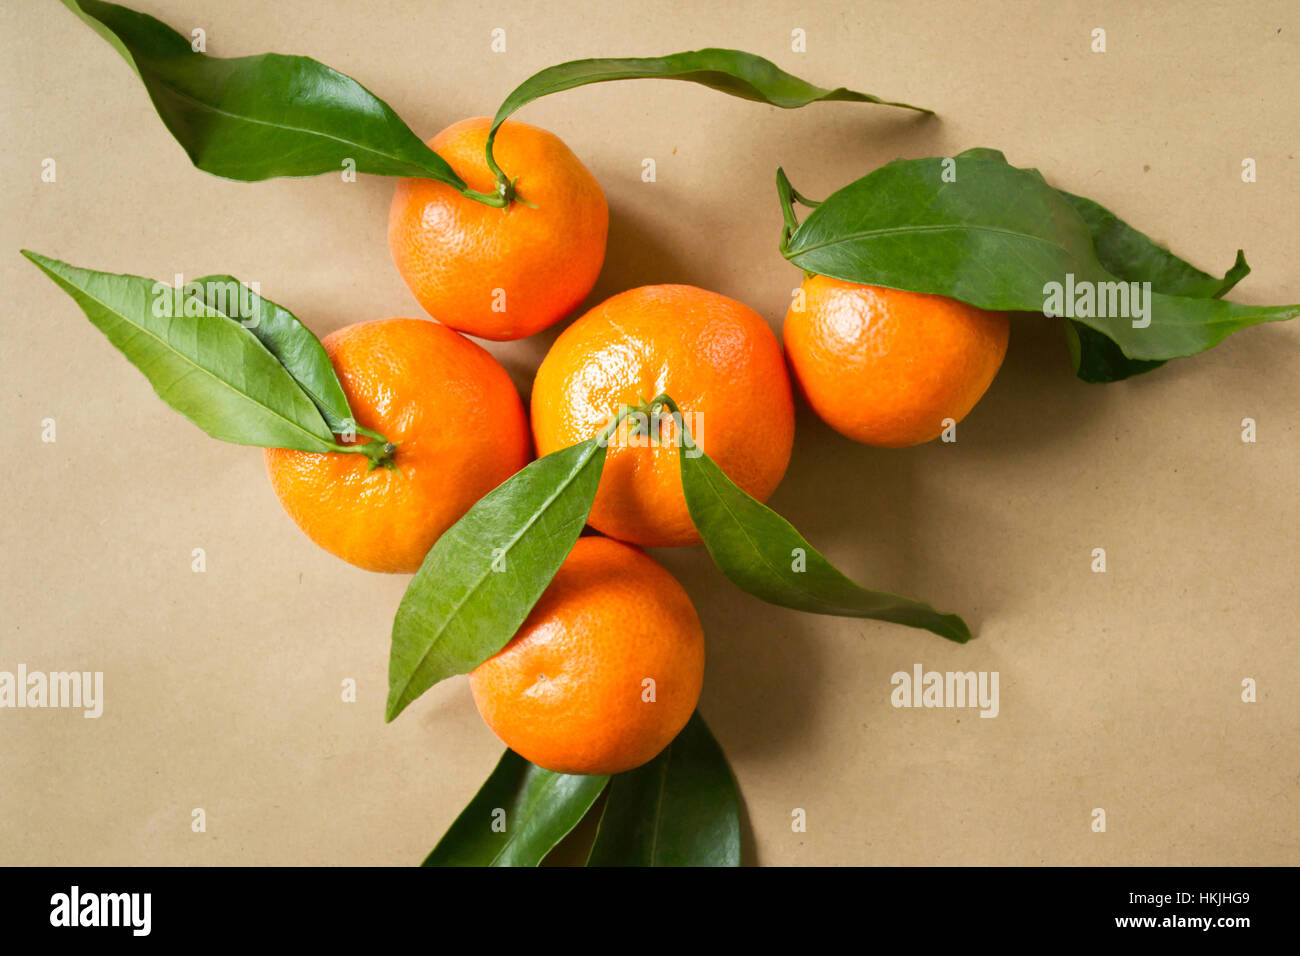 Bella mandarini arance sulla carta di avvolgimento Foto Stock